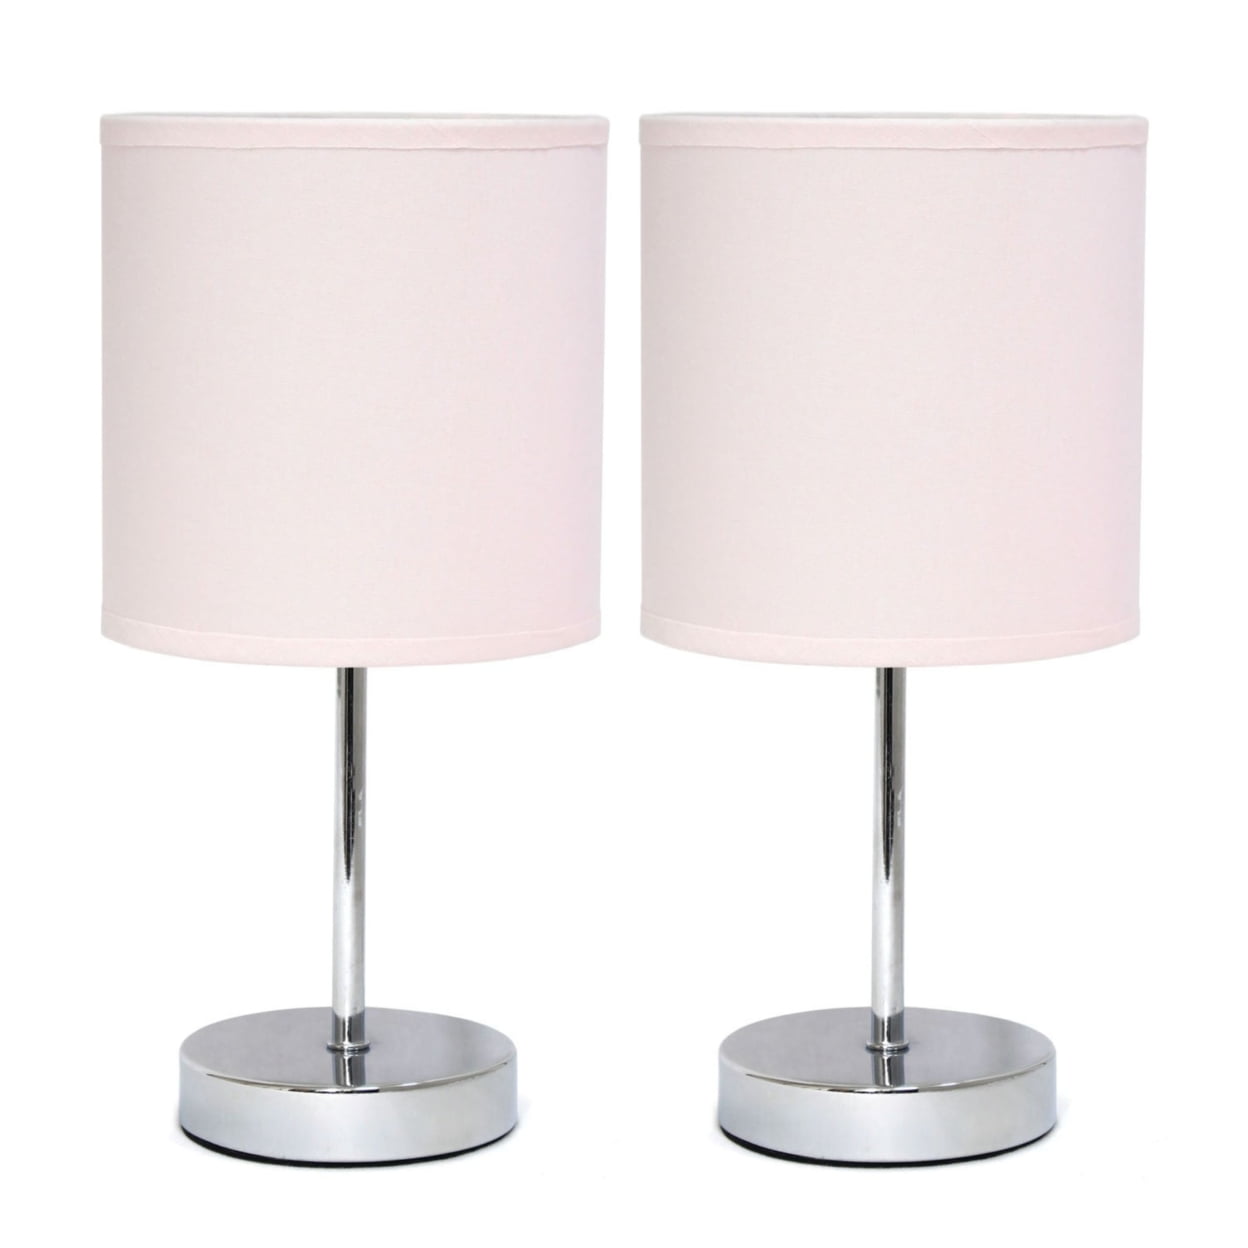 Lt2007-bpk-2pk Chrome Mini Basic Table Lamp With Fabric Shade, Blush Pink - Pack Of 2